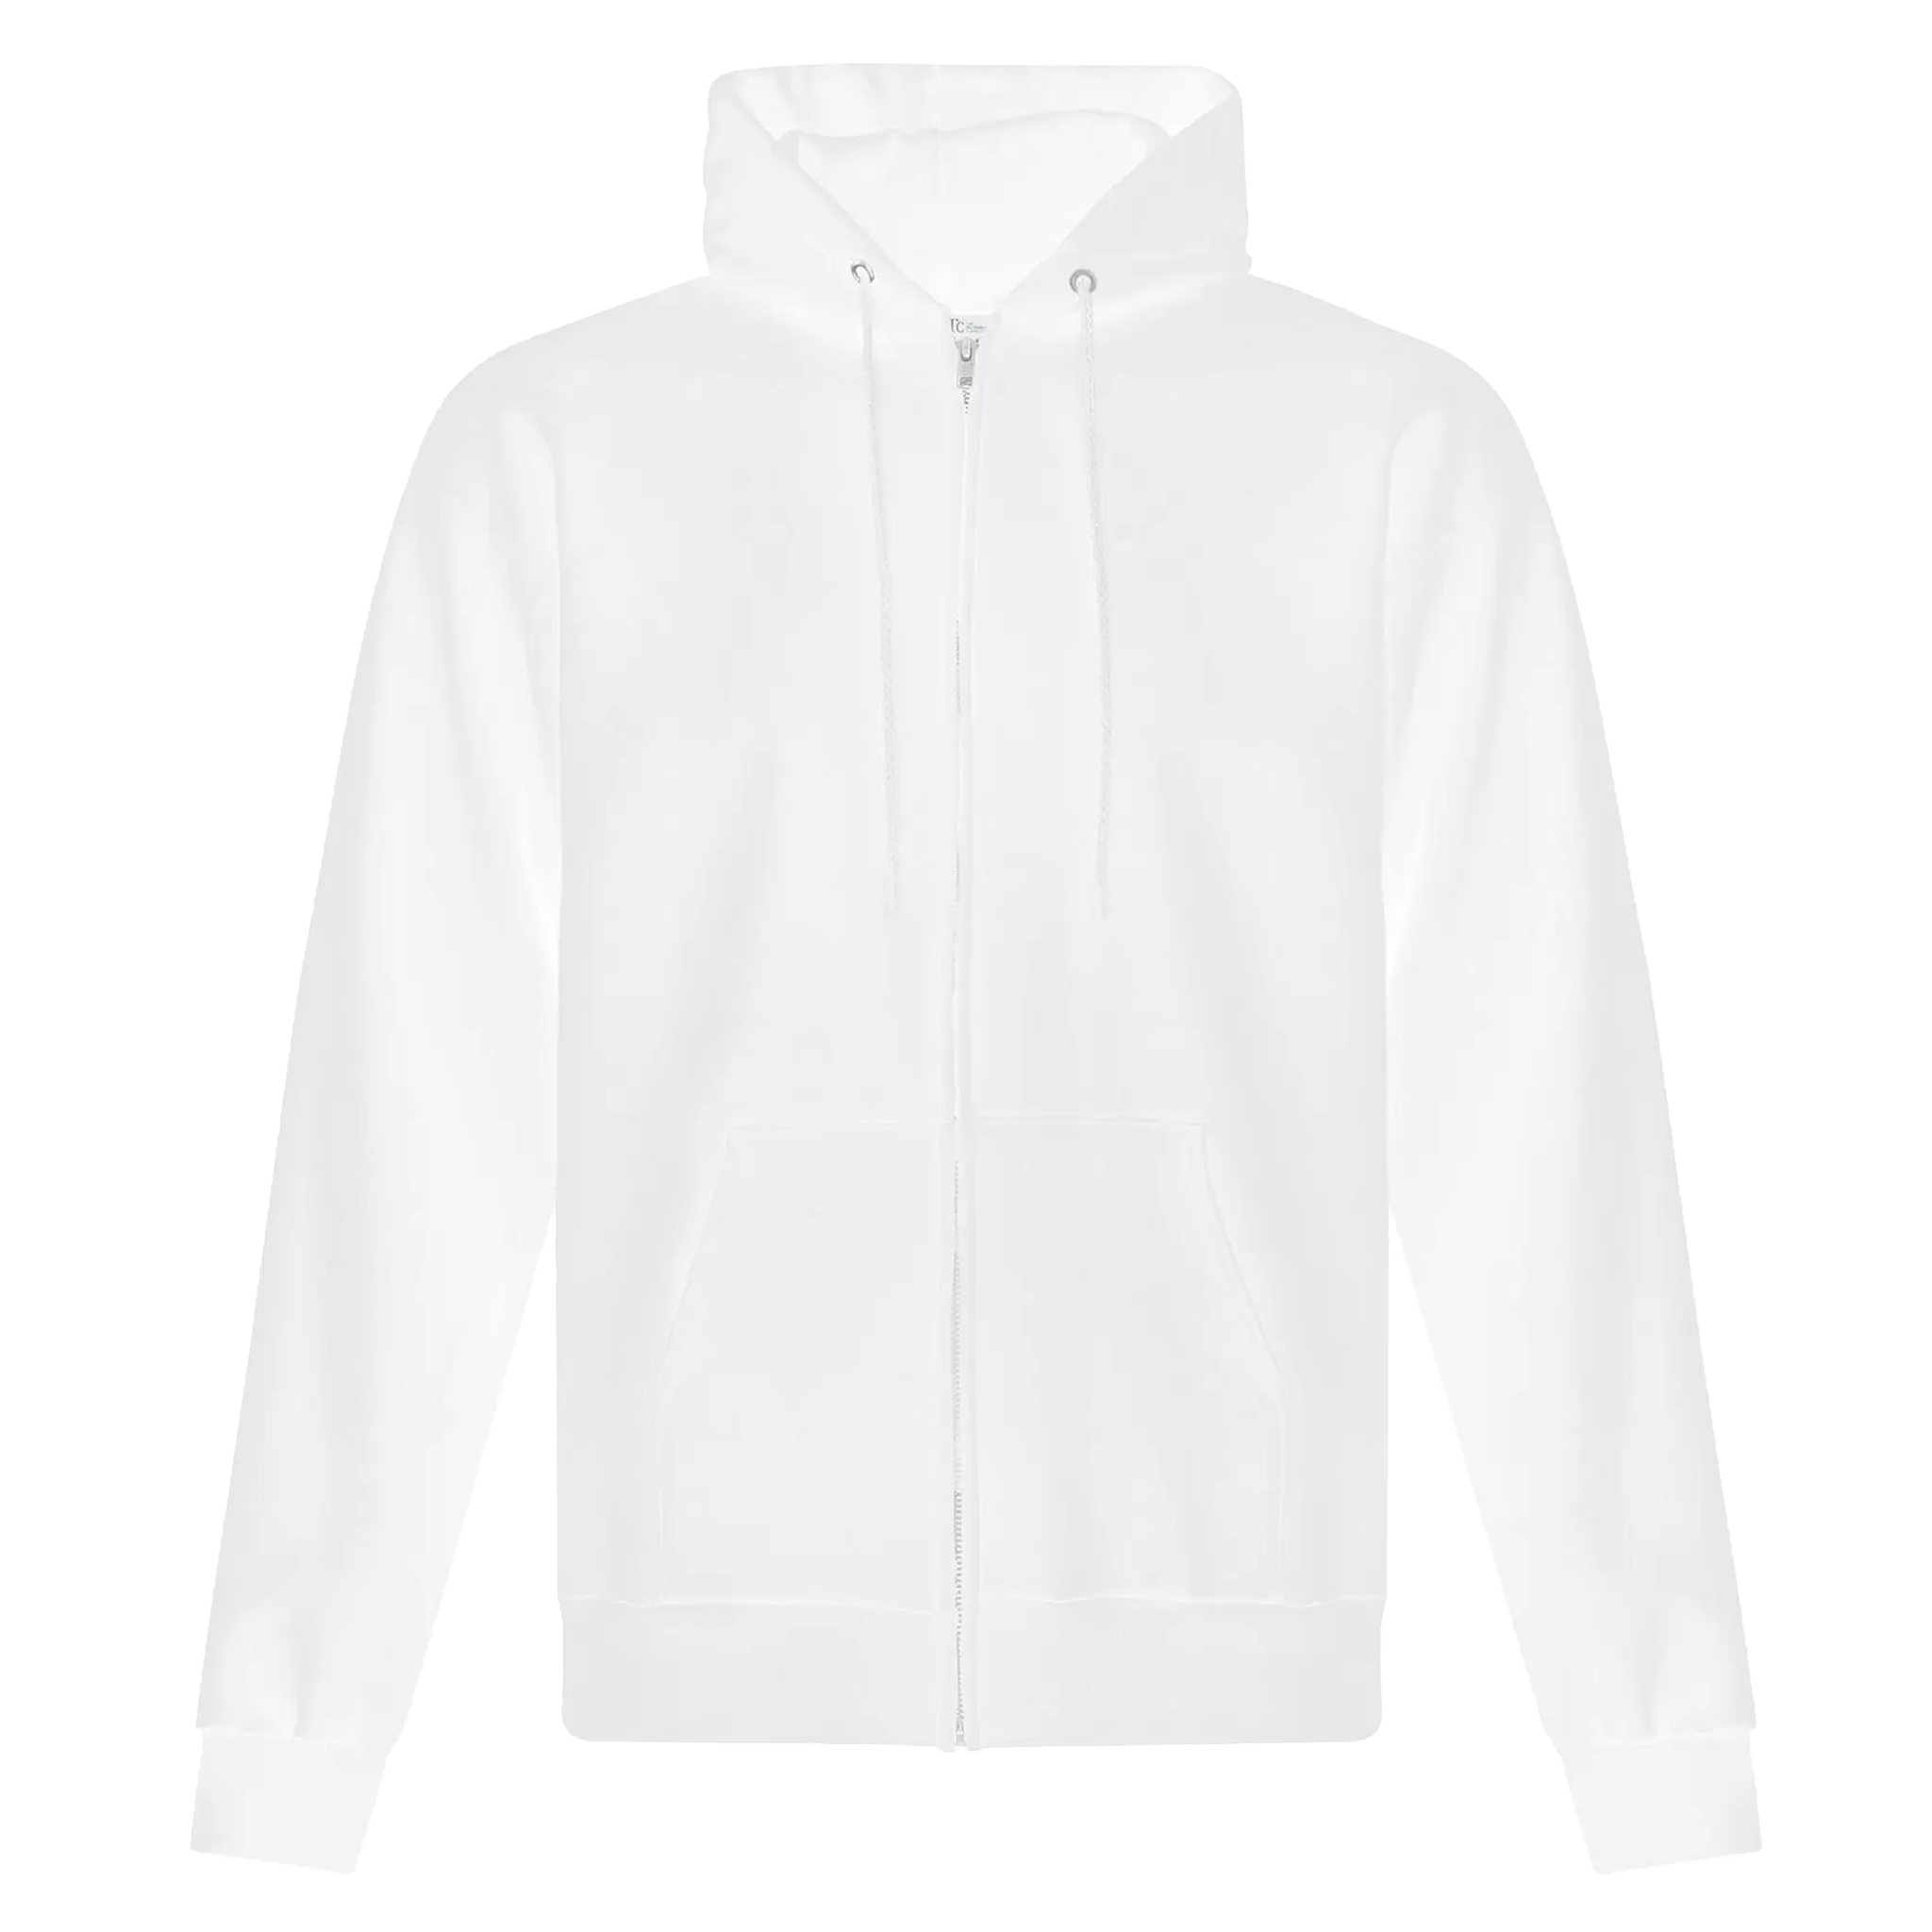 ATC Everyday Fleece Full Zip Hoodie - Adult Unisex Sizing S-4XL - White